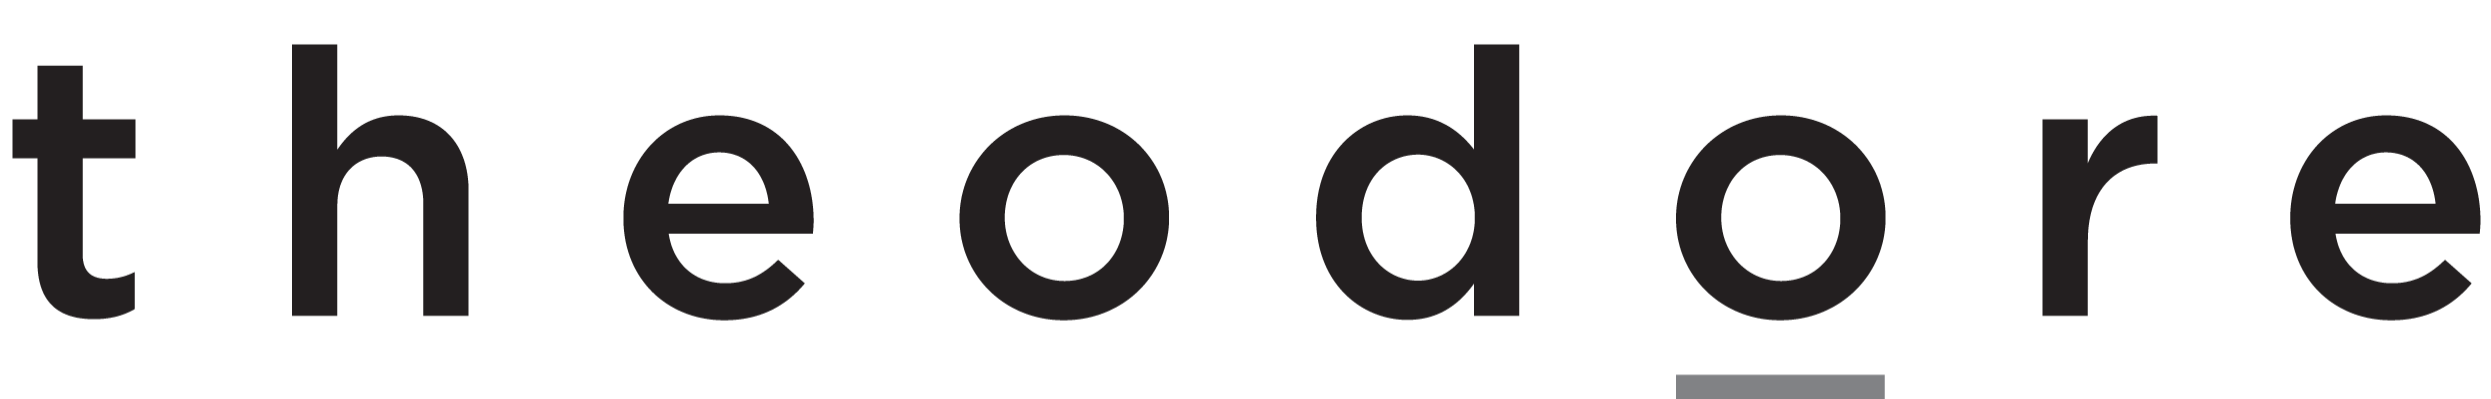 logotype of theodore music licensing